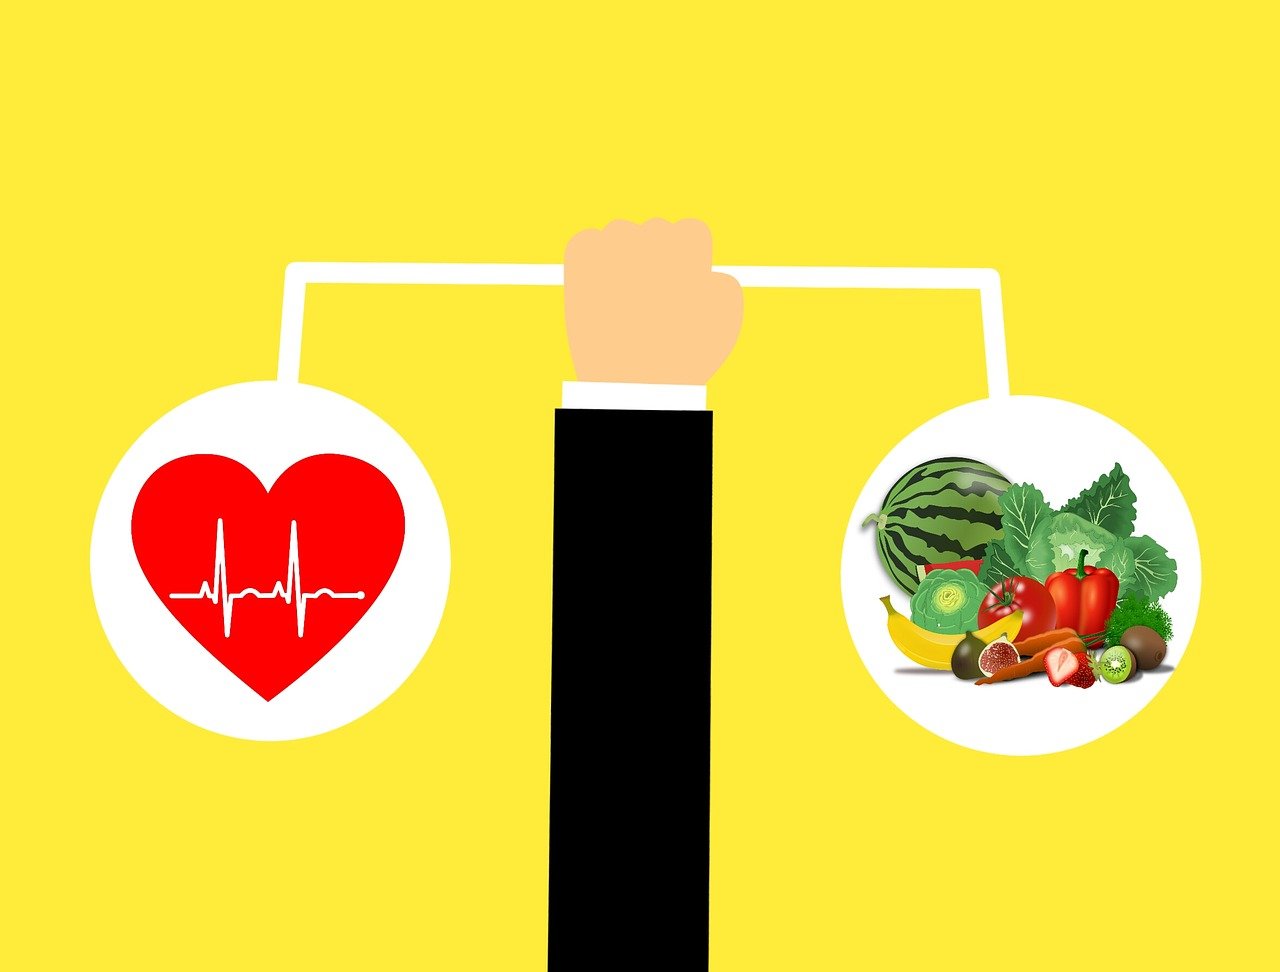 Balancing a healthy lifestyle